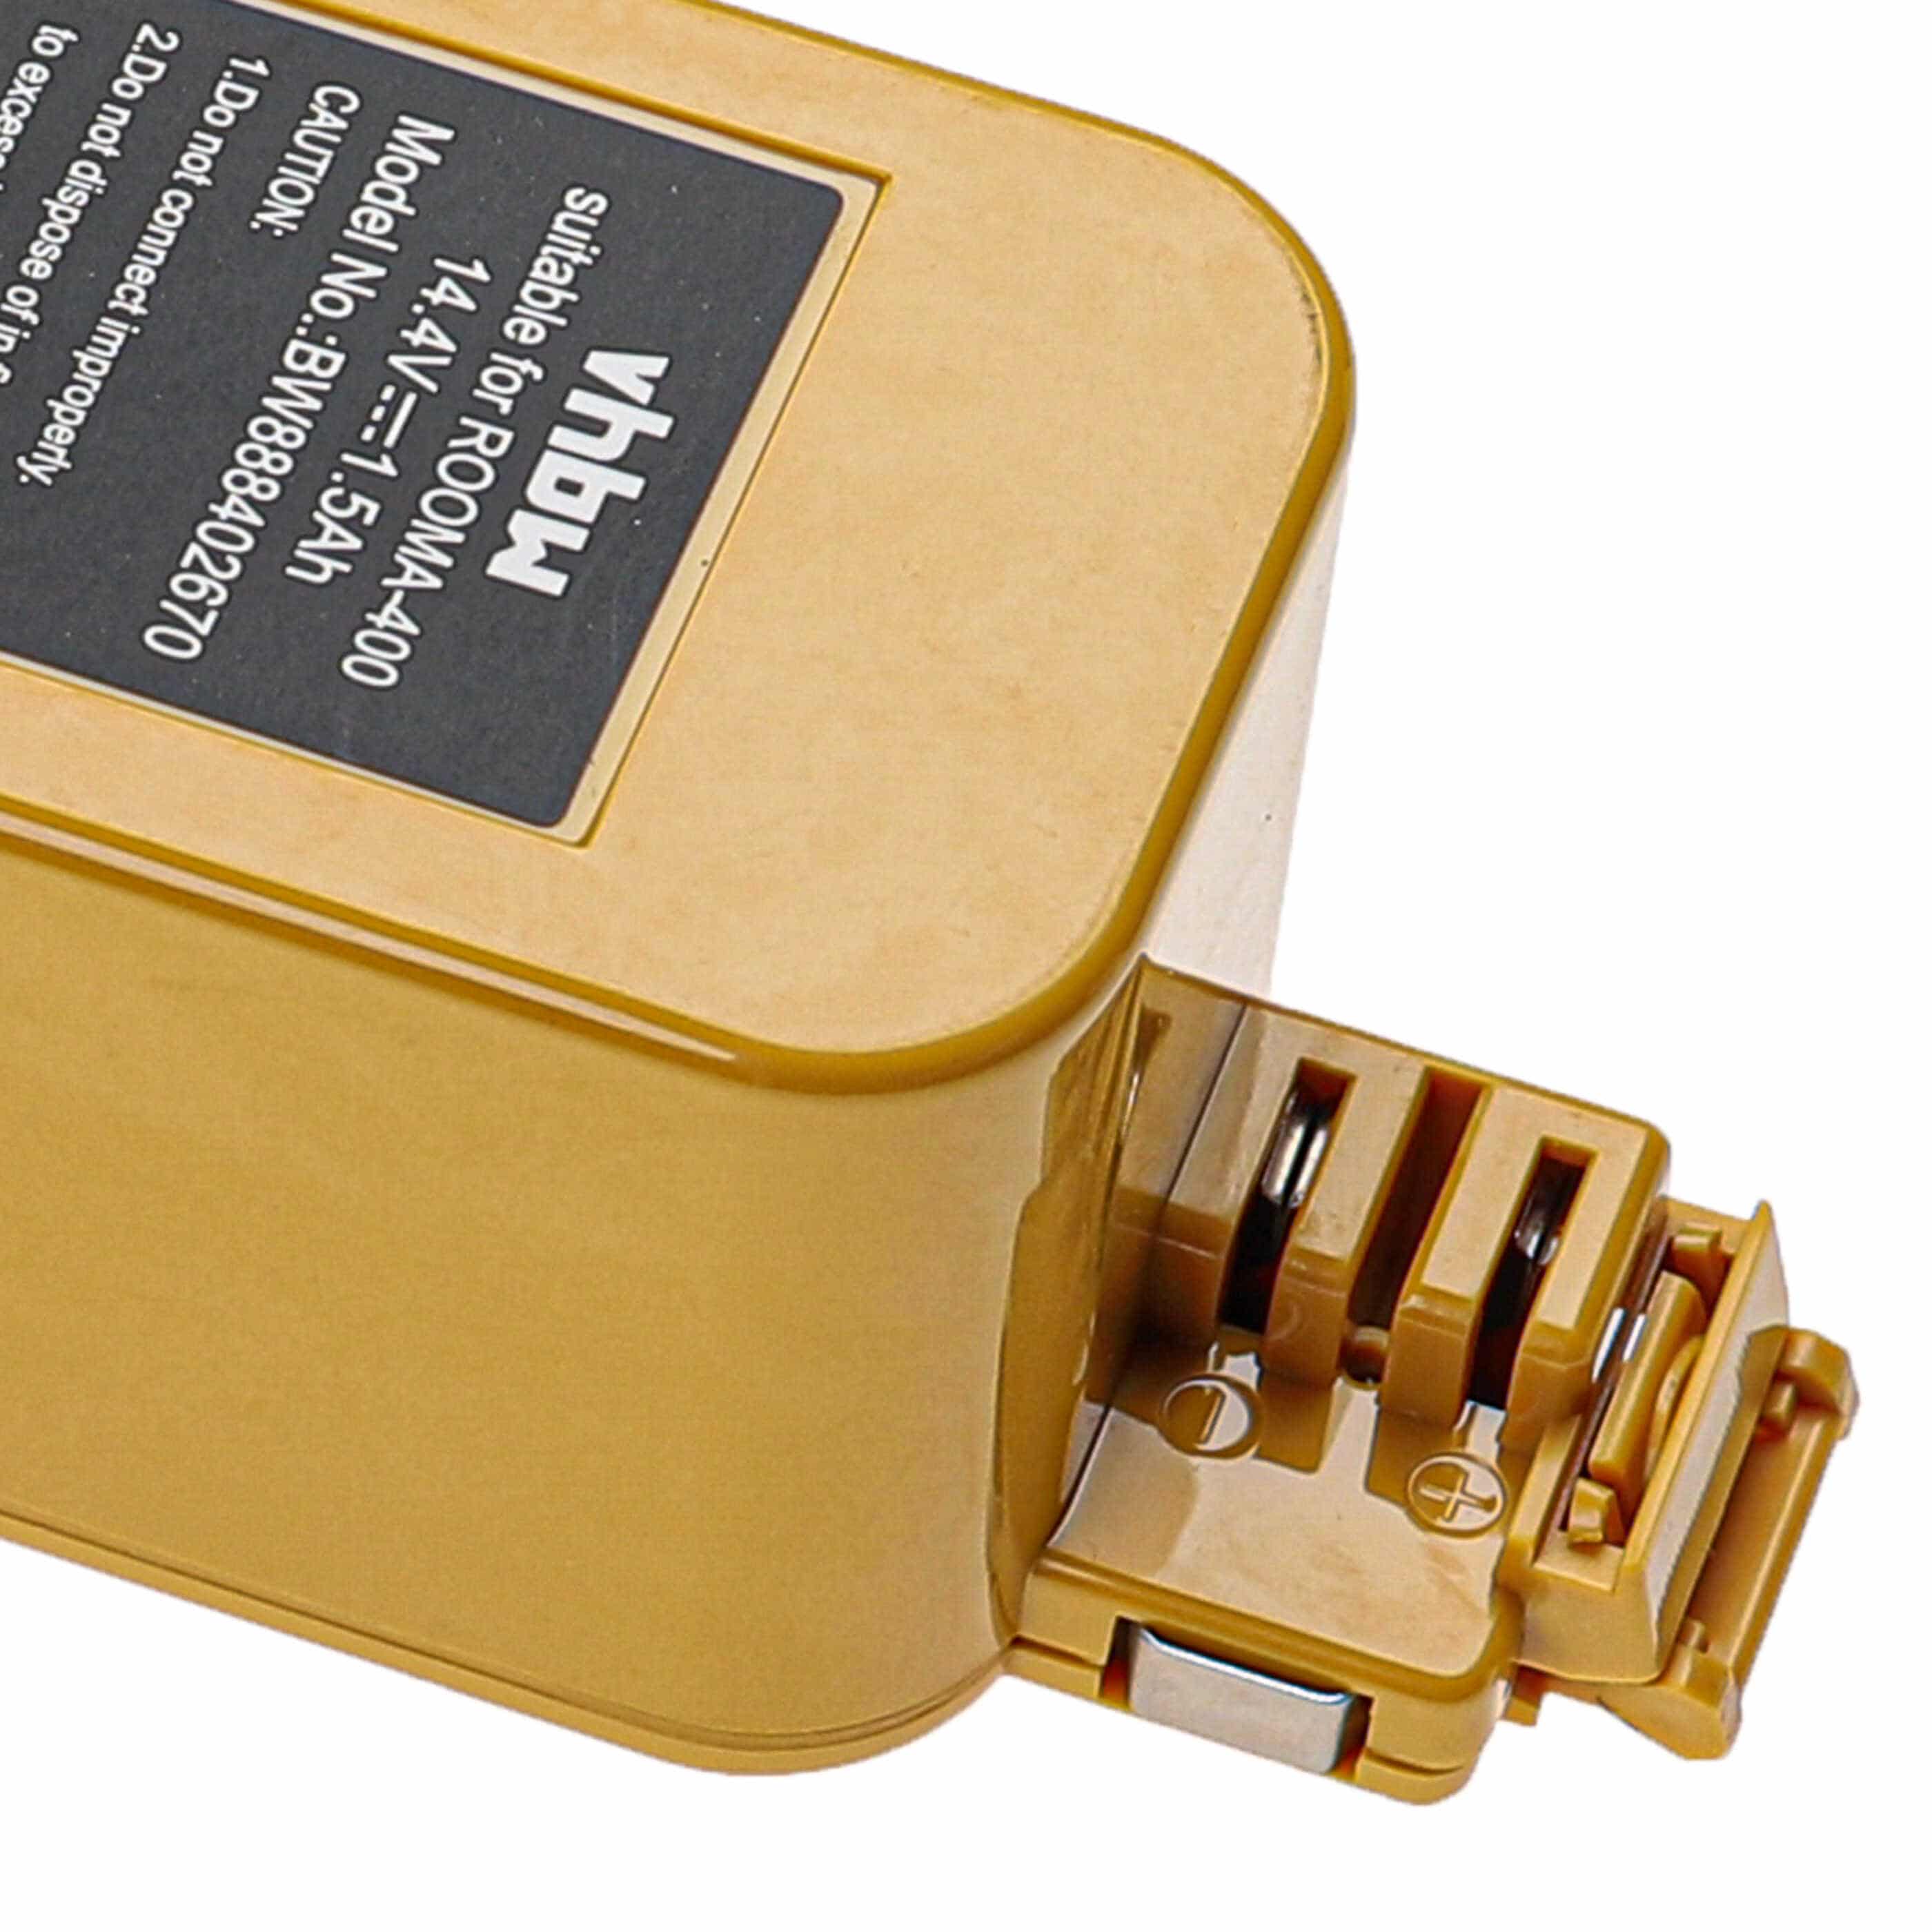 Akumulator do robota zamiennik APS 4905, NC-3493-919, 11700, 17373 - 1500 mAh 14,14 V NiMH, żółty